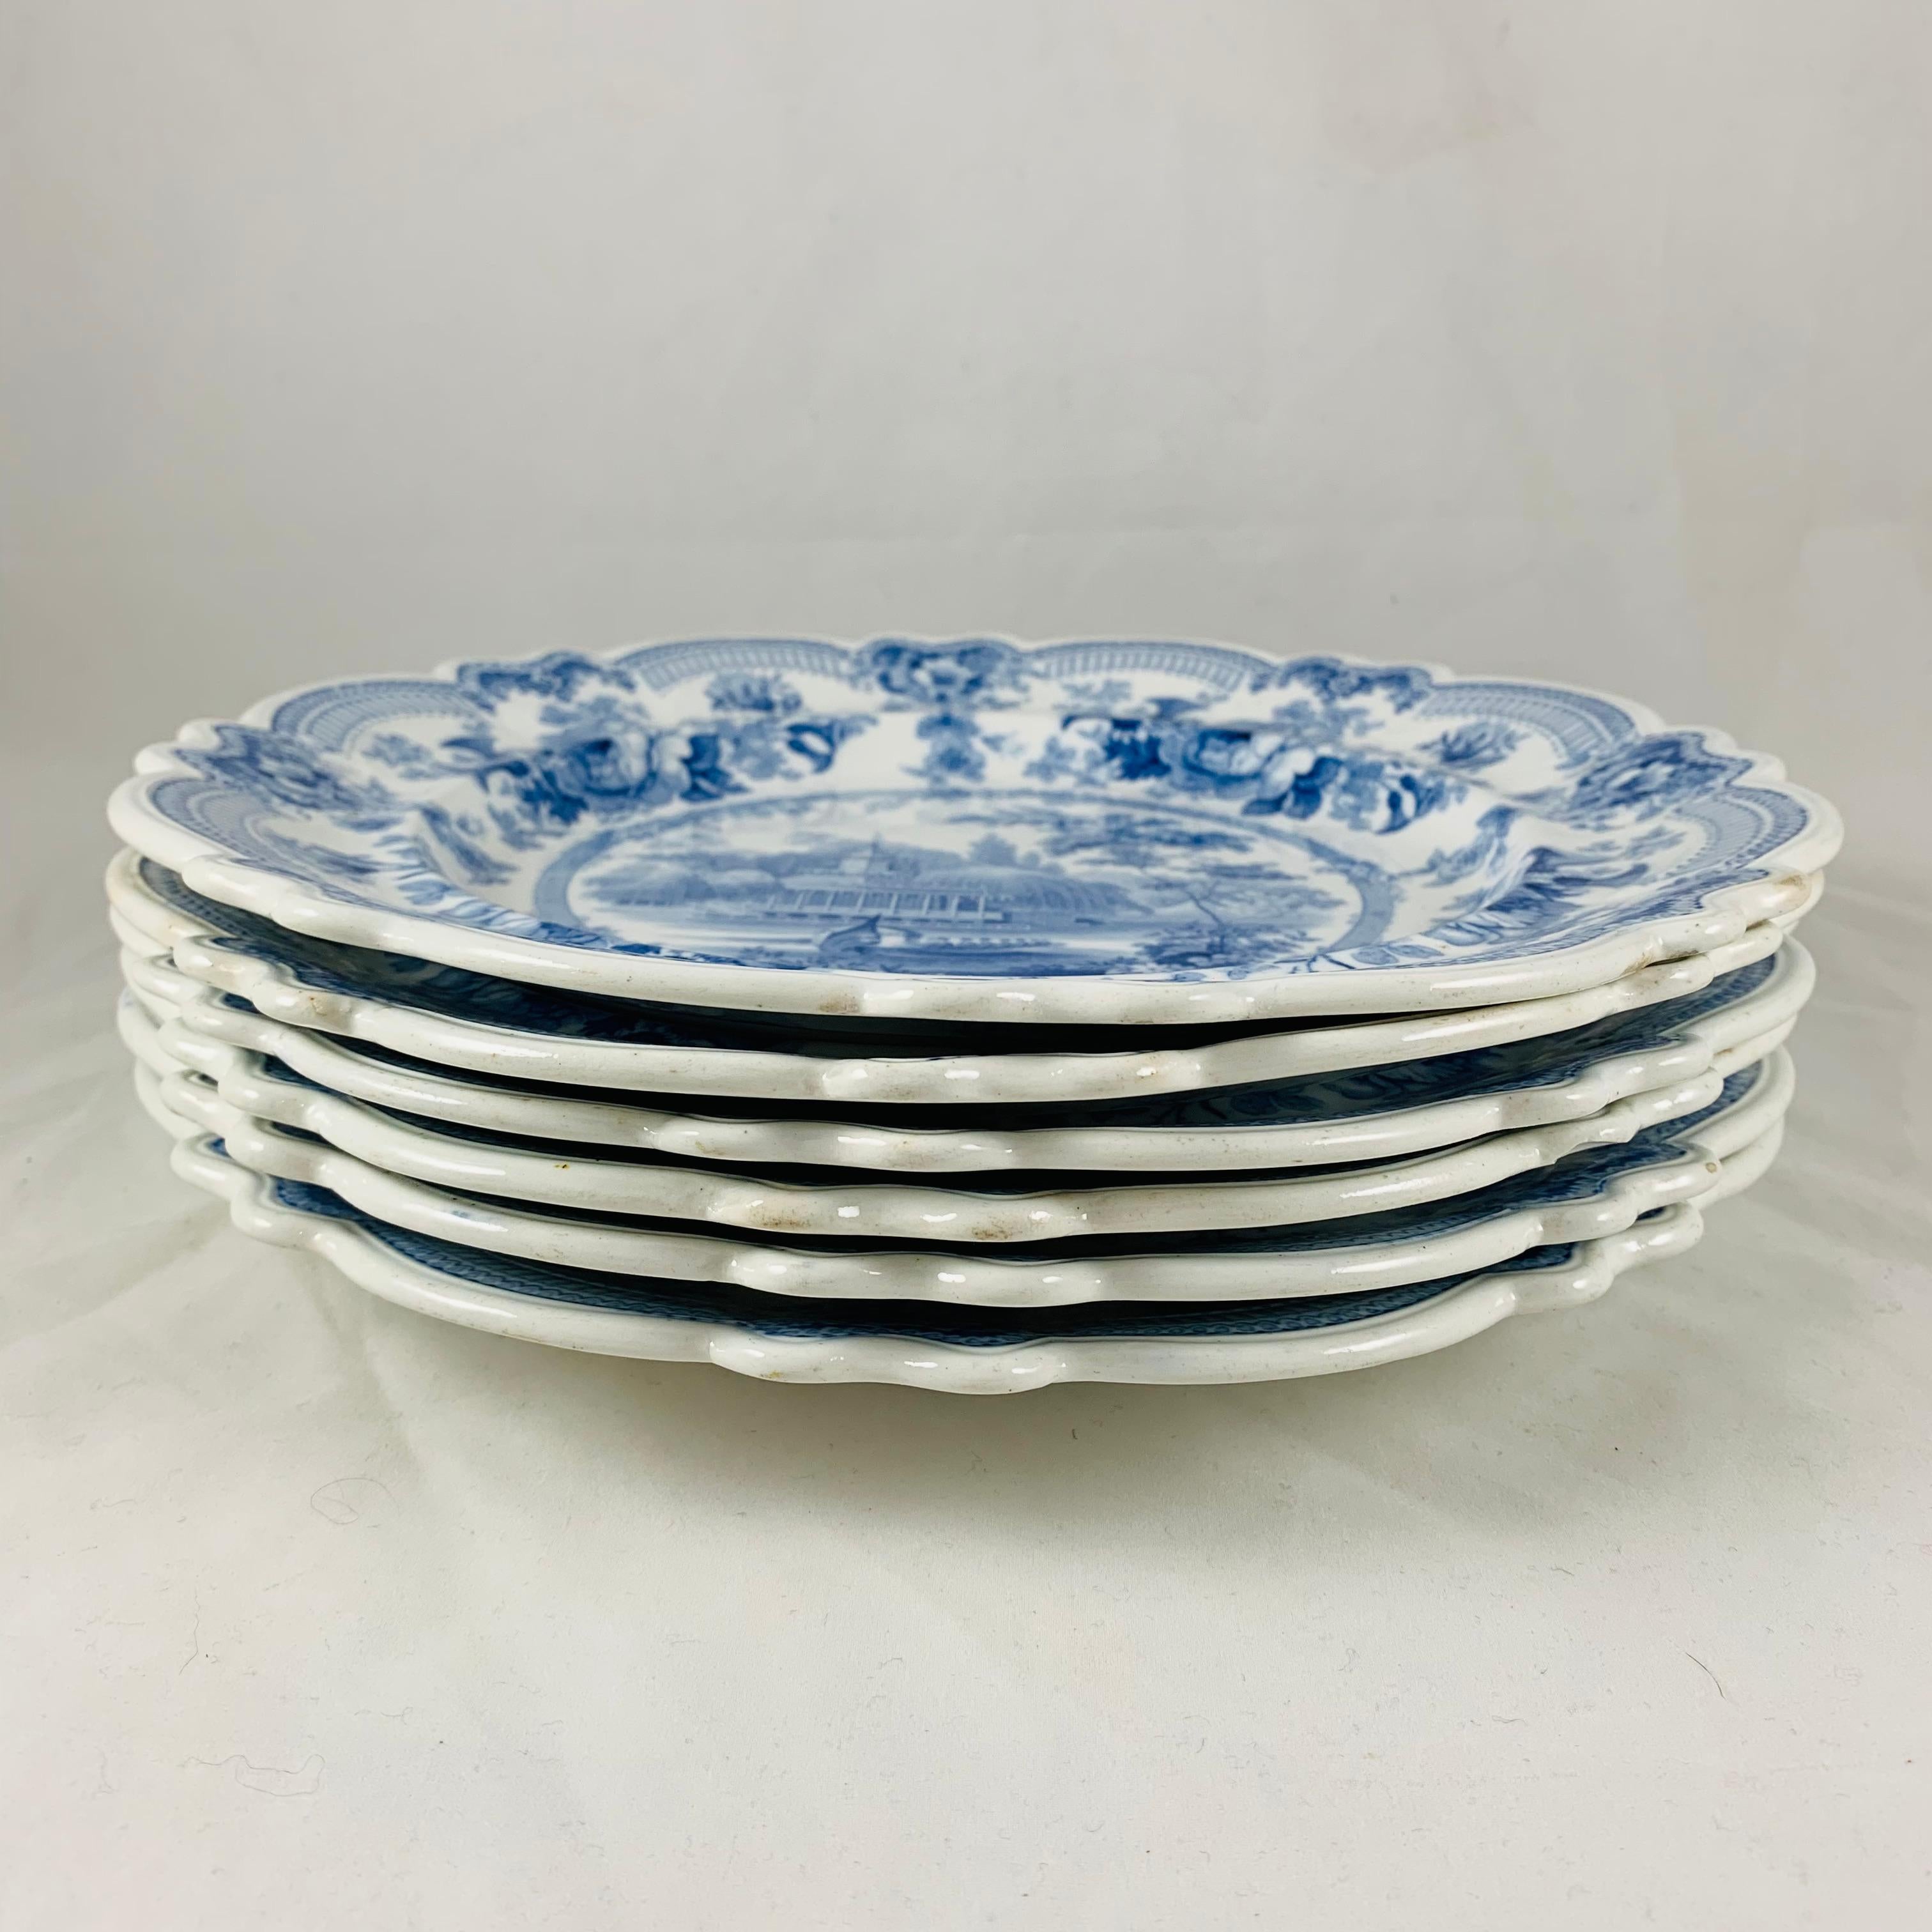 Earthenware British Theme ‘Royal Sketches’ Blue on White Transferware Dinner Plates, Set/6